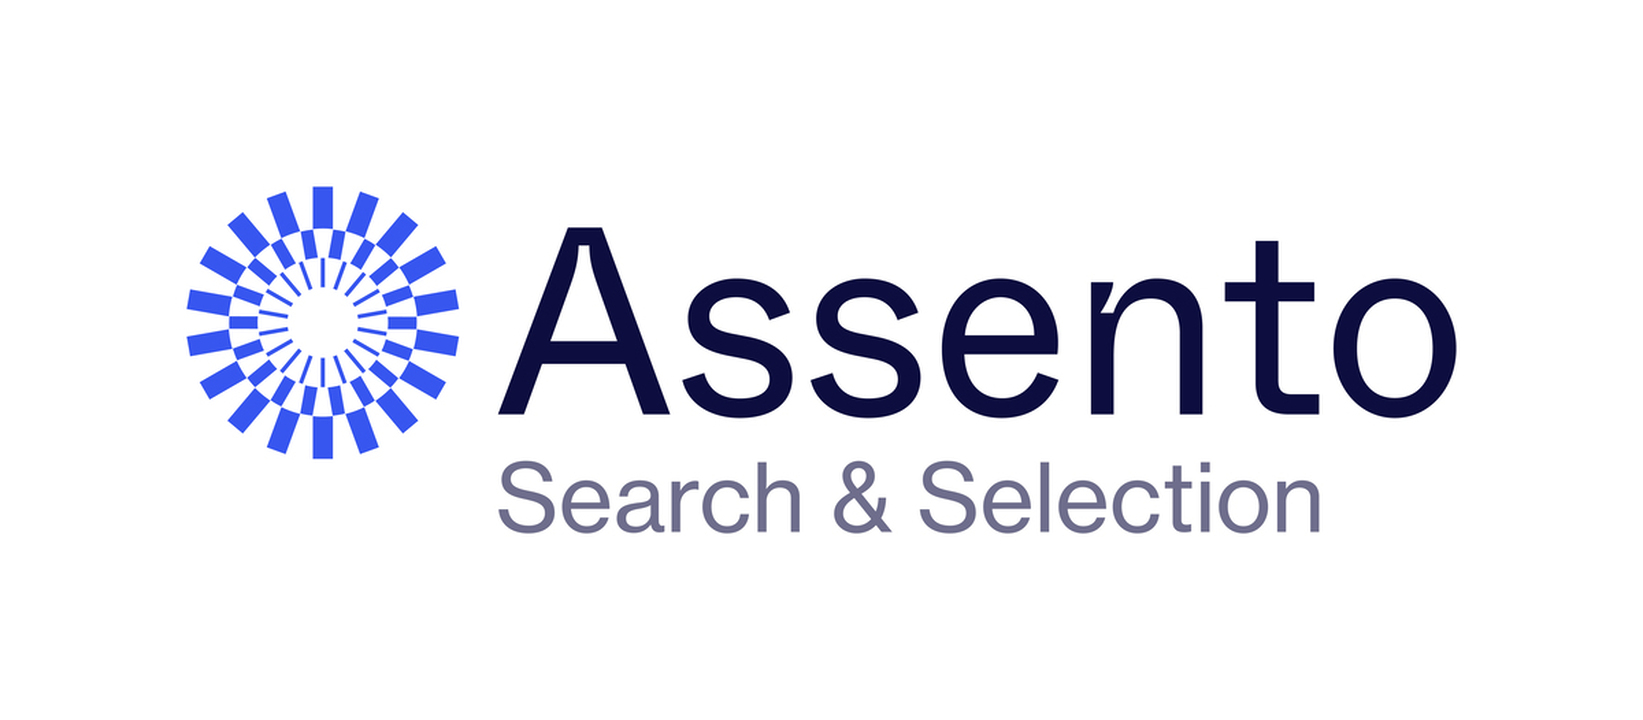 Assento Search & Selection